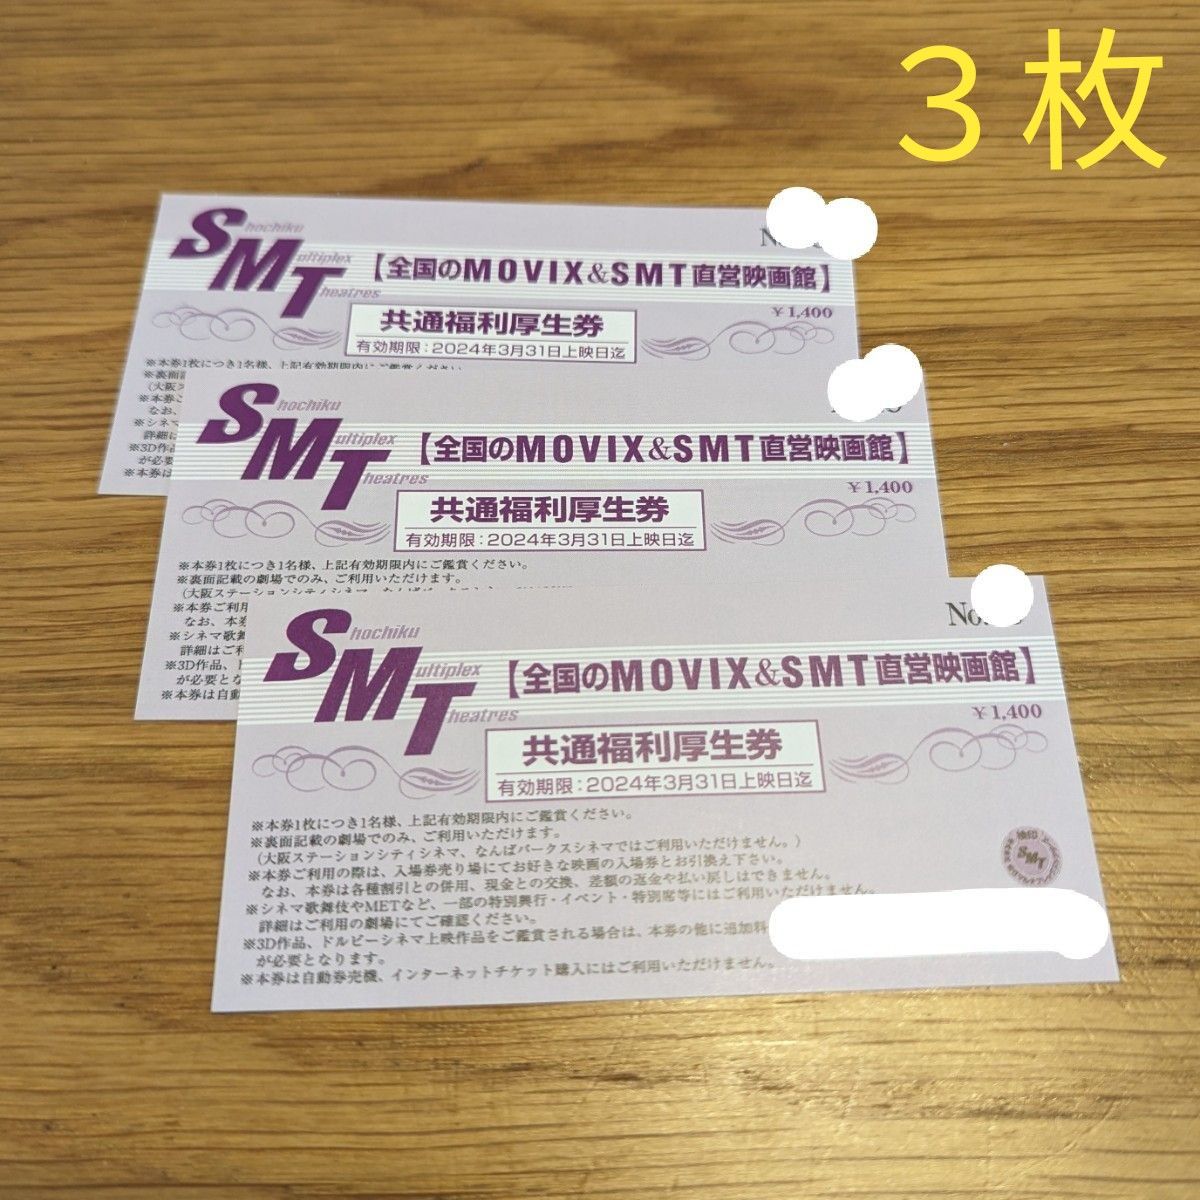 MOVIX＆SMT直営映画館 映画チケット 3枚セット - その他